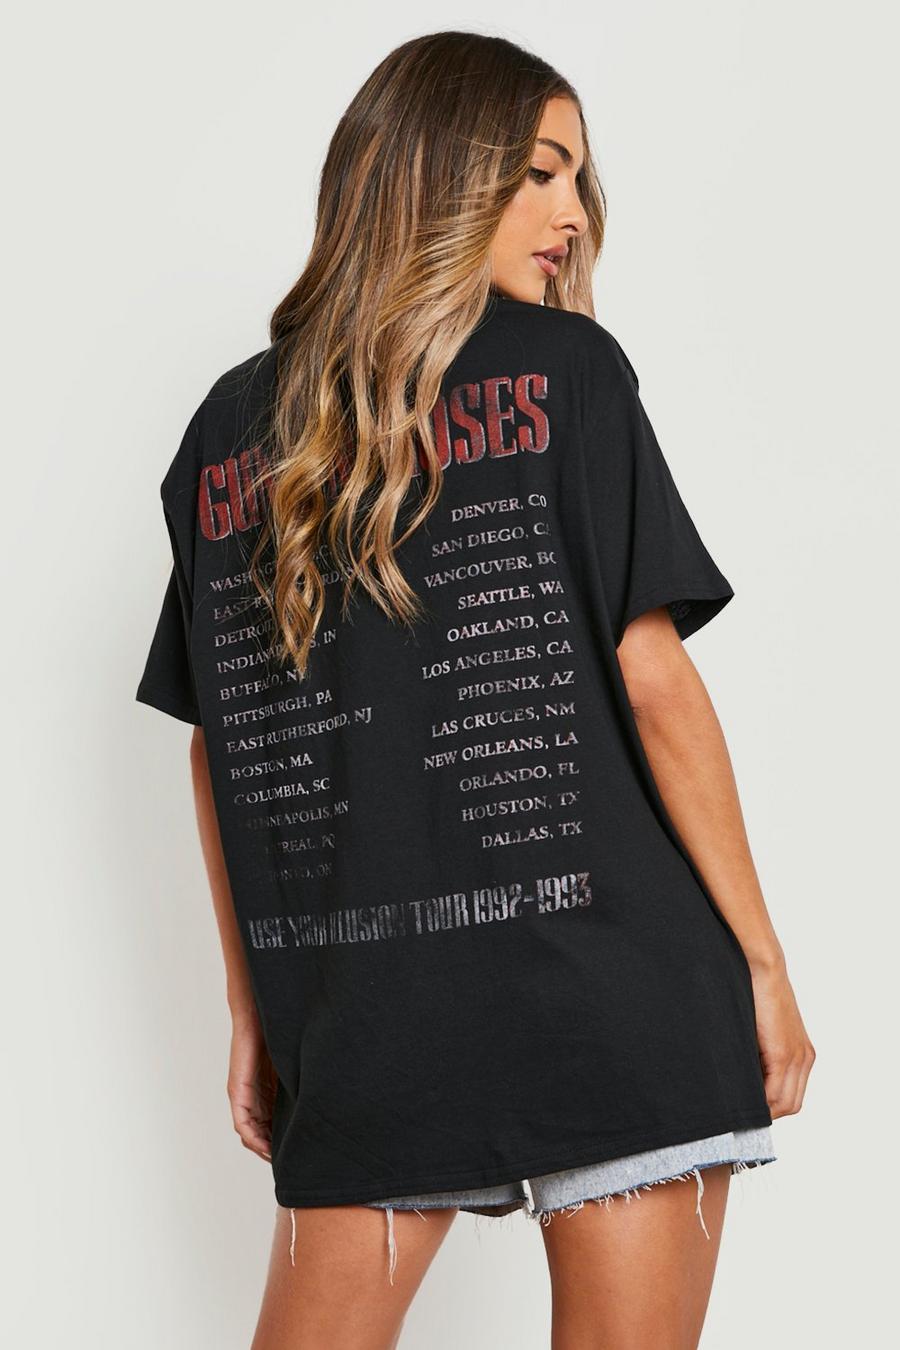 boohoo Guns N Roses Back Print Crop Band T-Shirt - White - Size L